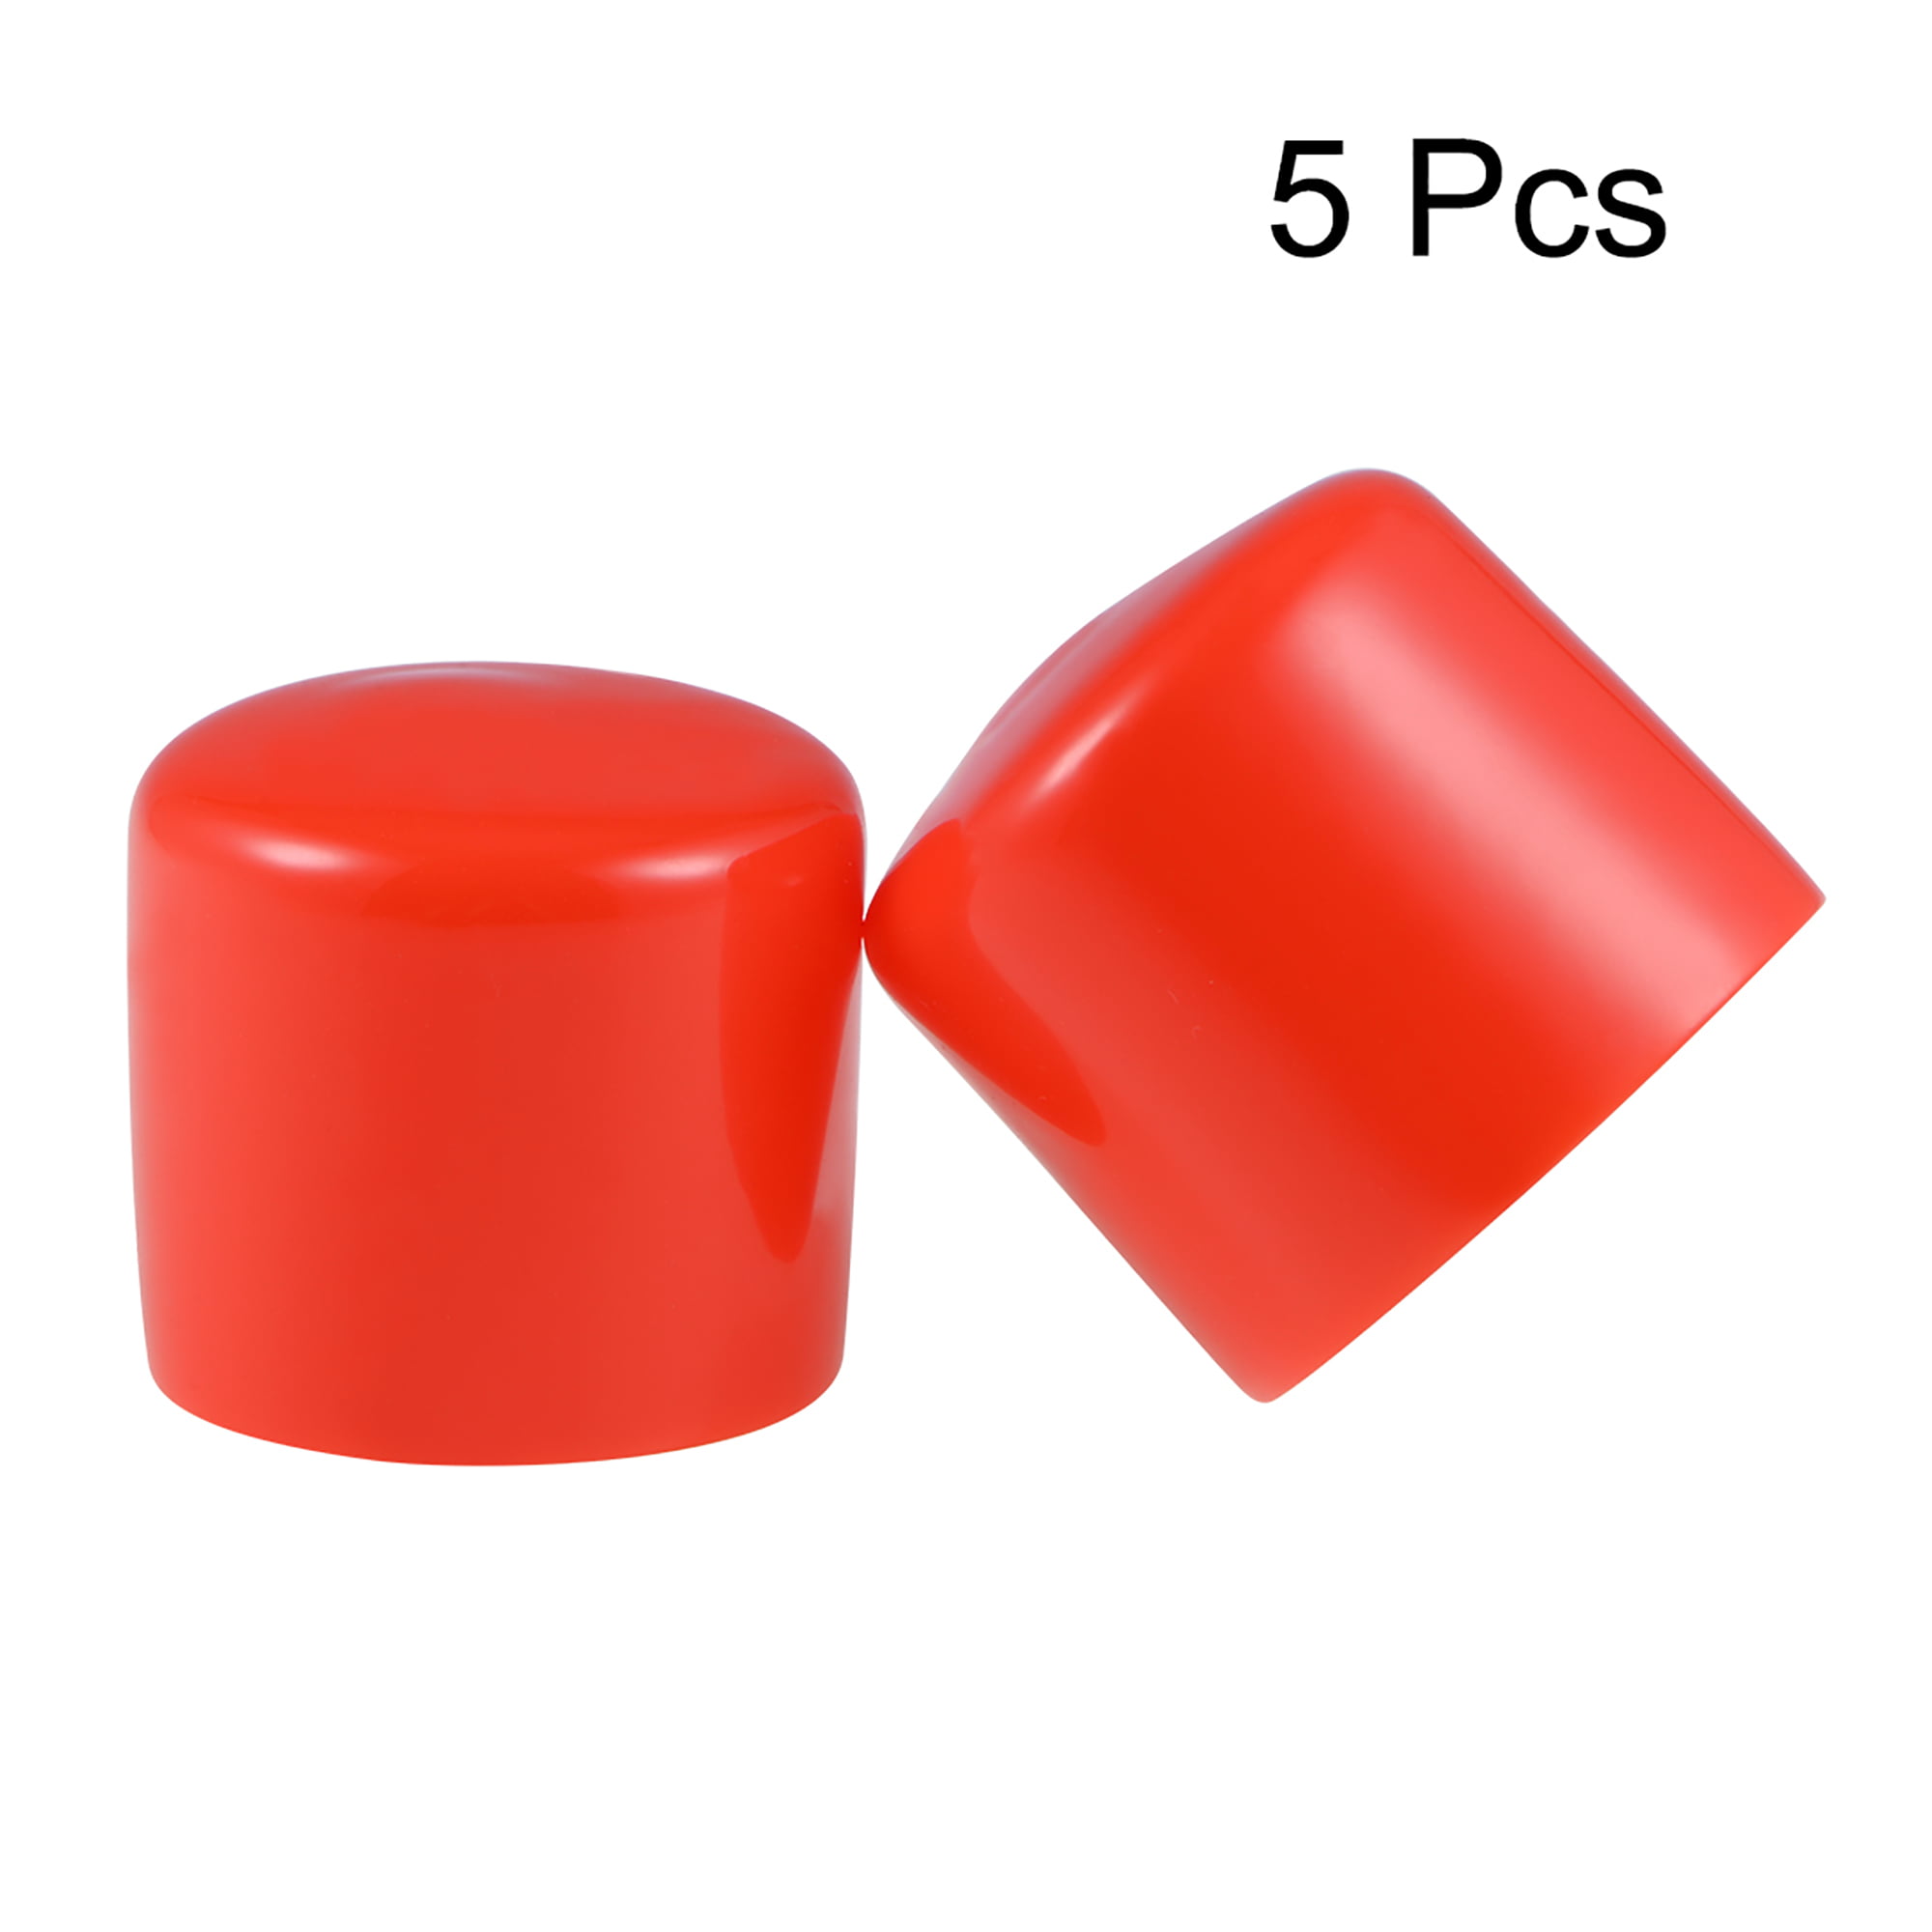 50pcs 1/2 inch Rubber caps ID Round Cover Cap Flexible Screw caps Protectors Red 